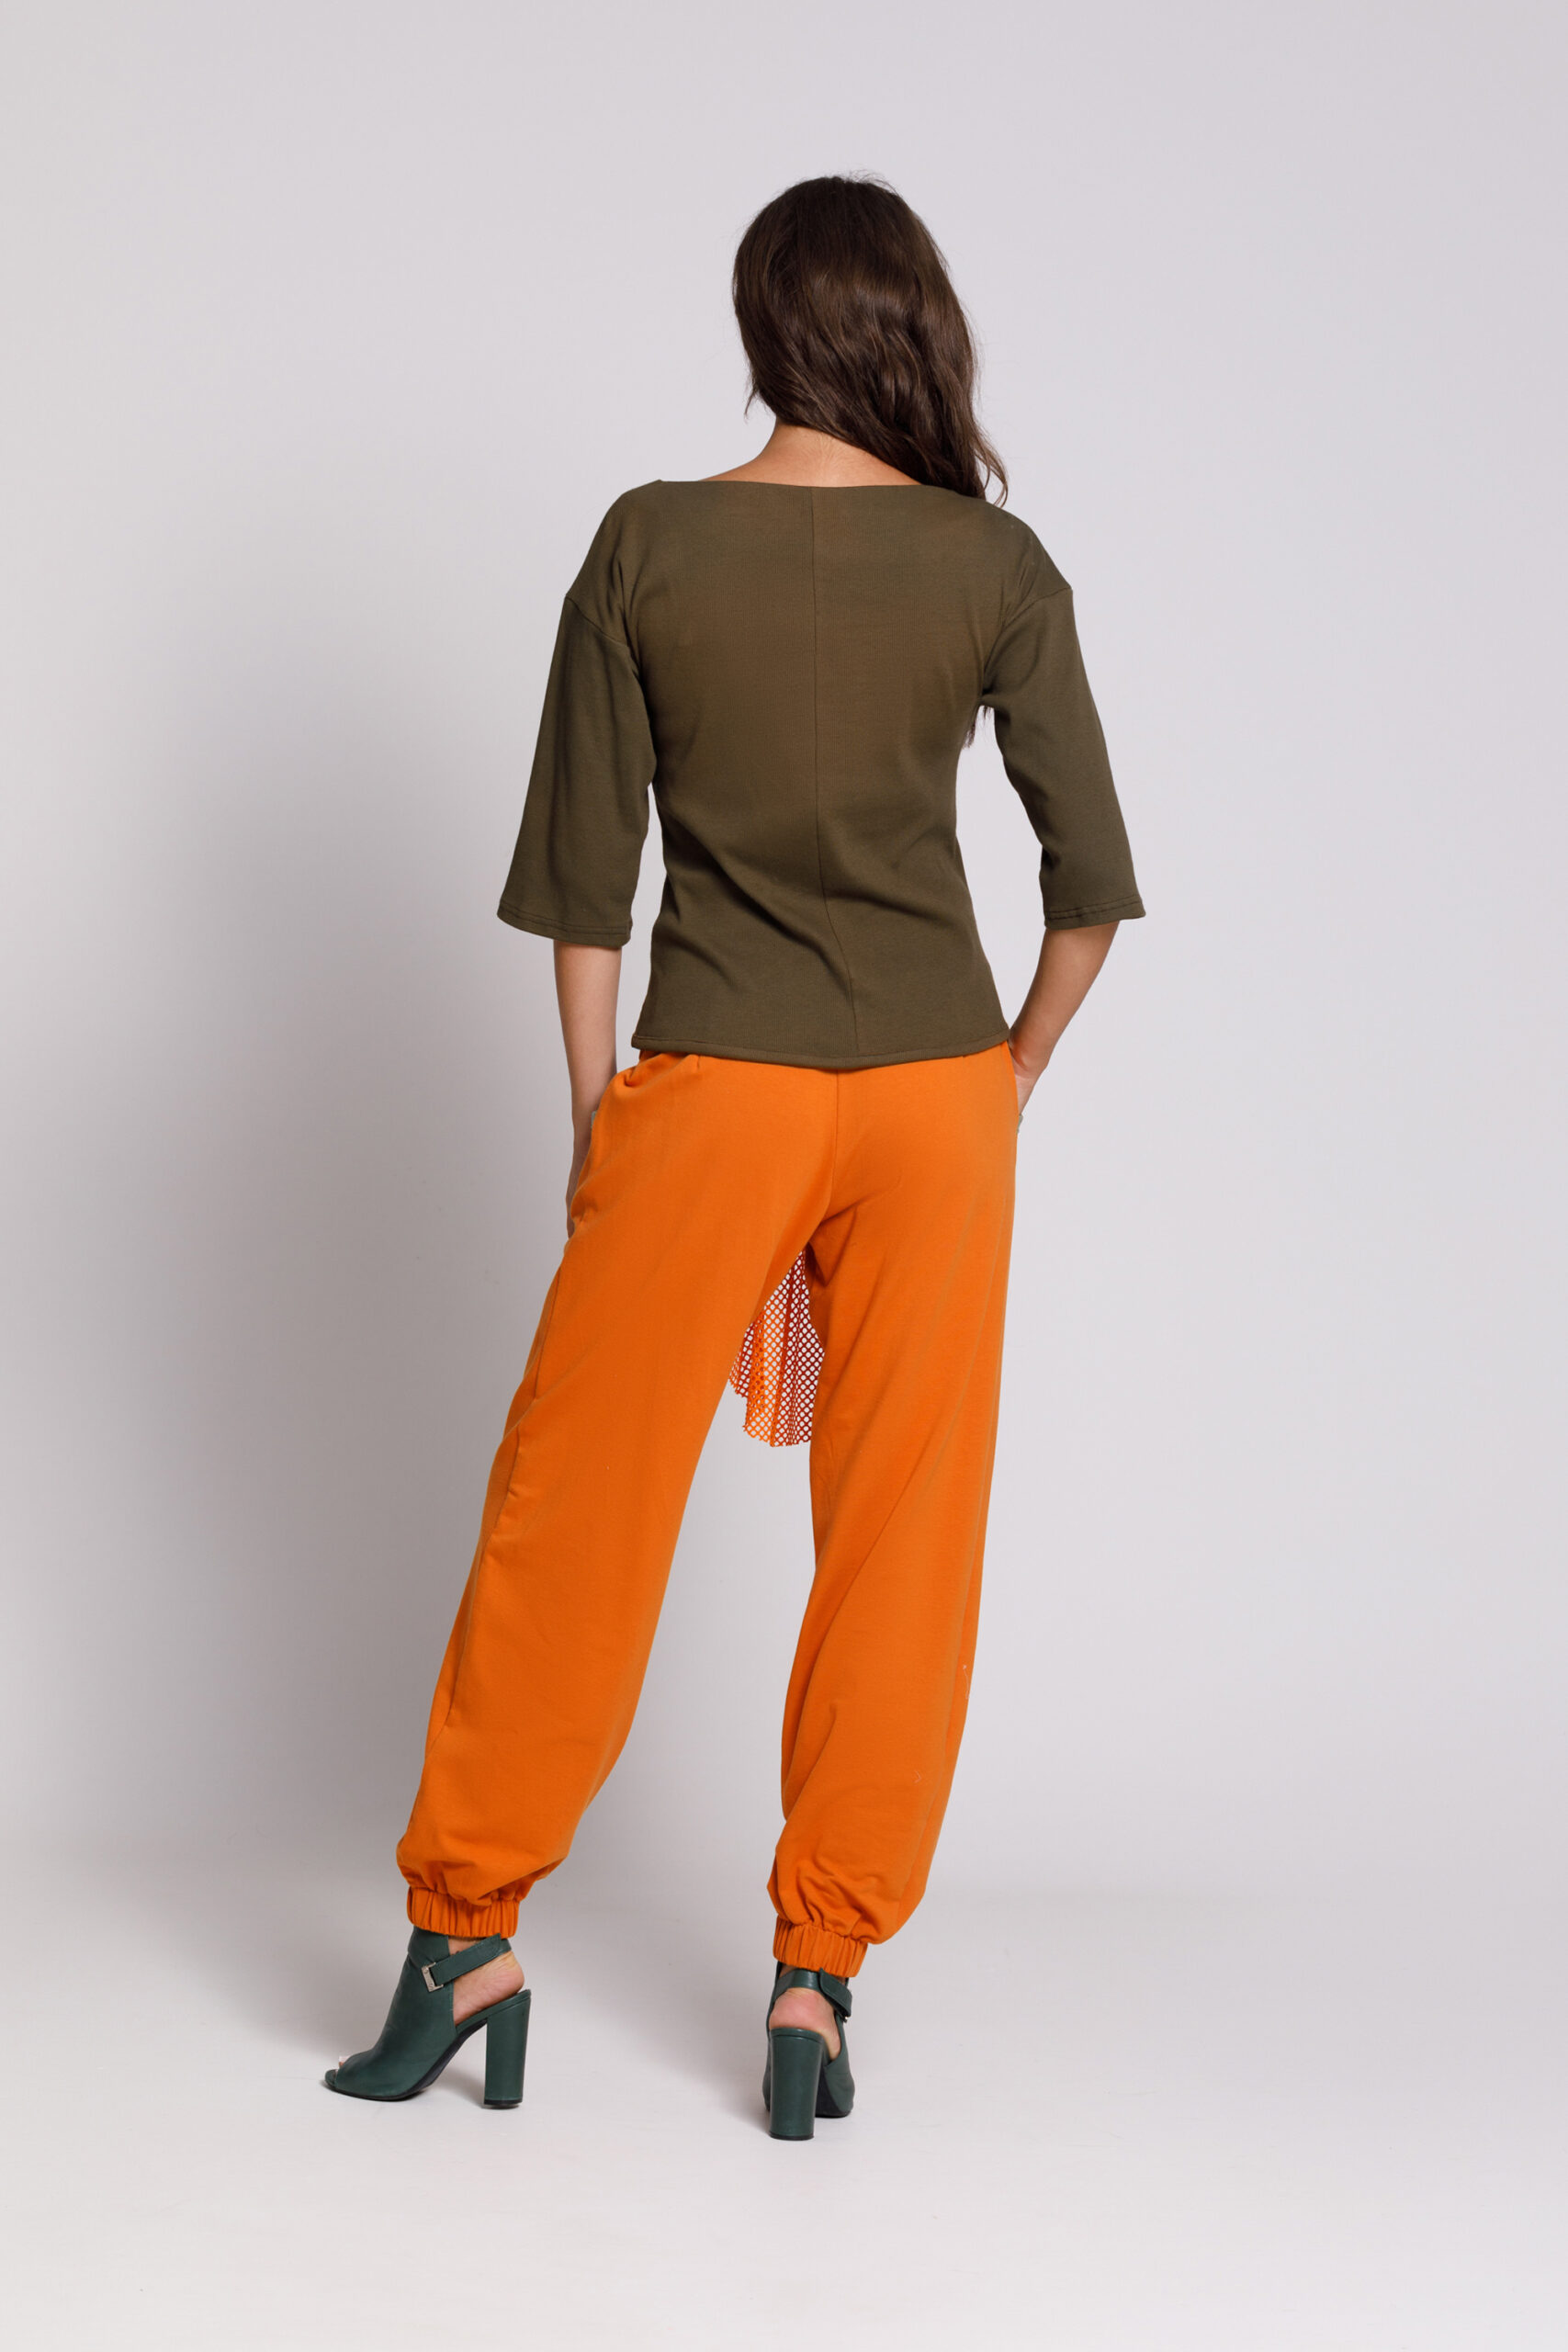 OLARIS orange plush pants with mesh lining. Natural fabrics, original design, handmade embroidery